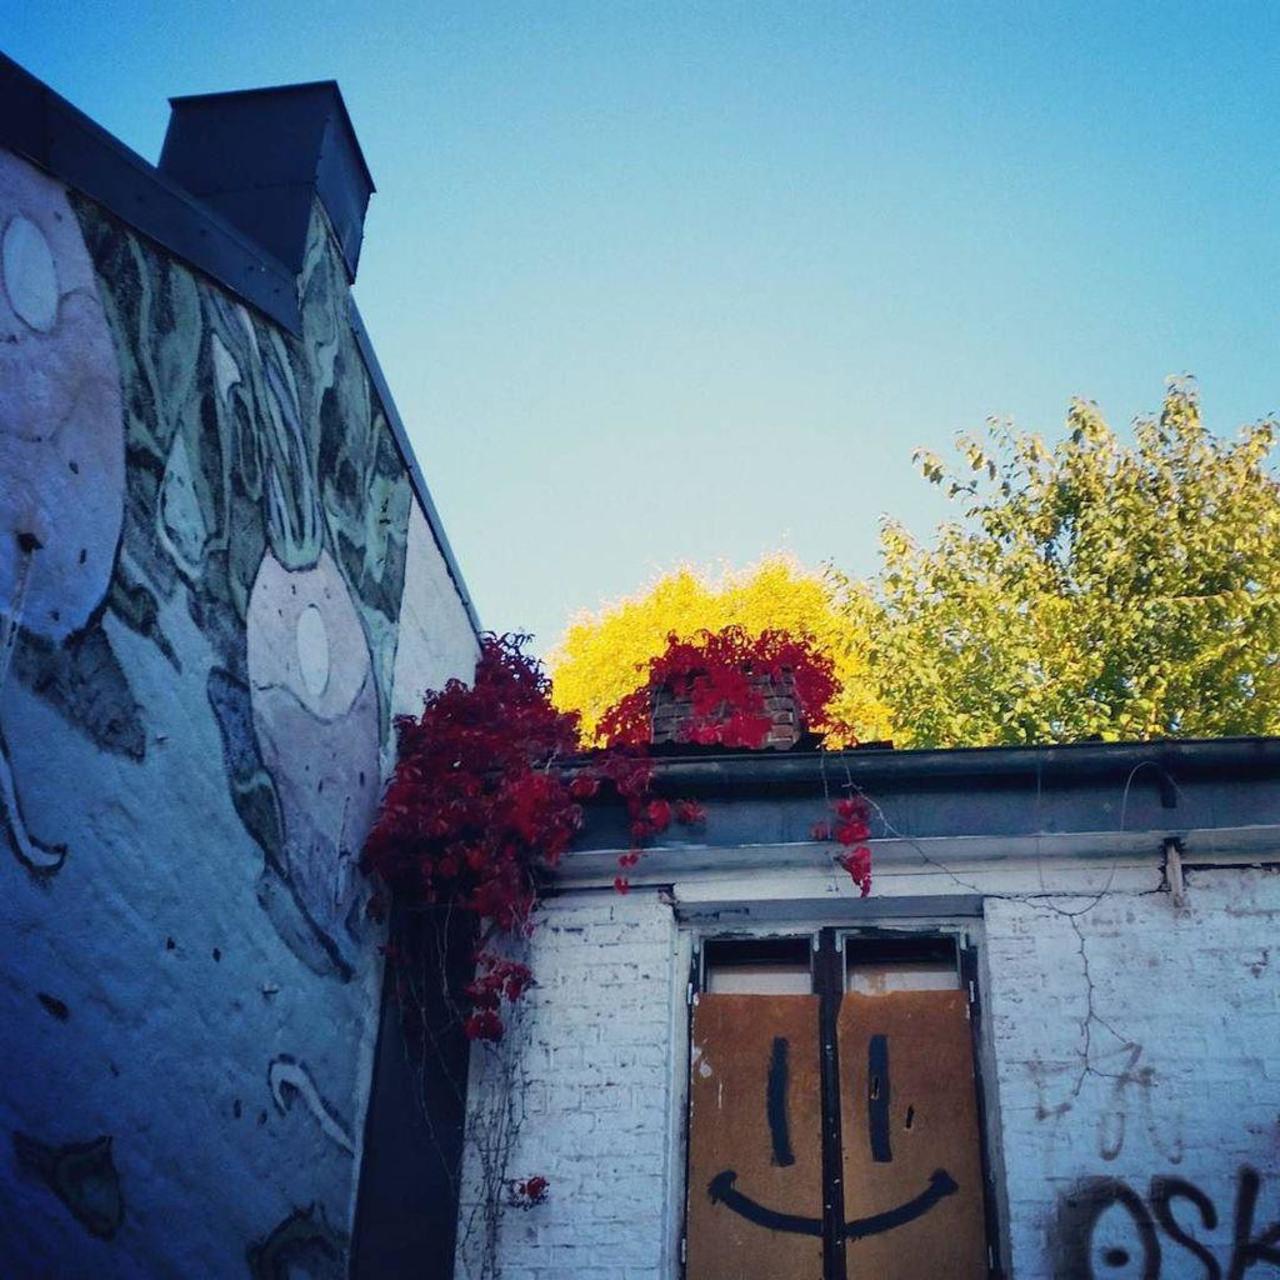 Smile to the world #gatekunst #gatekunstoslo #høstkanten #urbanart #streetart #streetartoslo #graffiti #fall #archi… http://t.co/2EqH6sRZHv